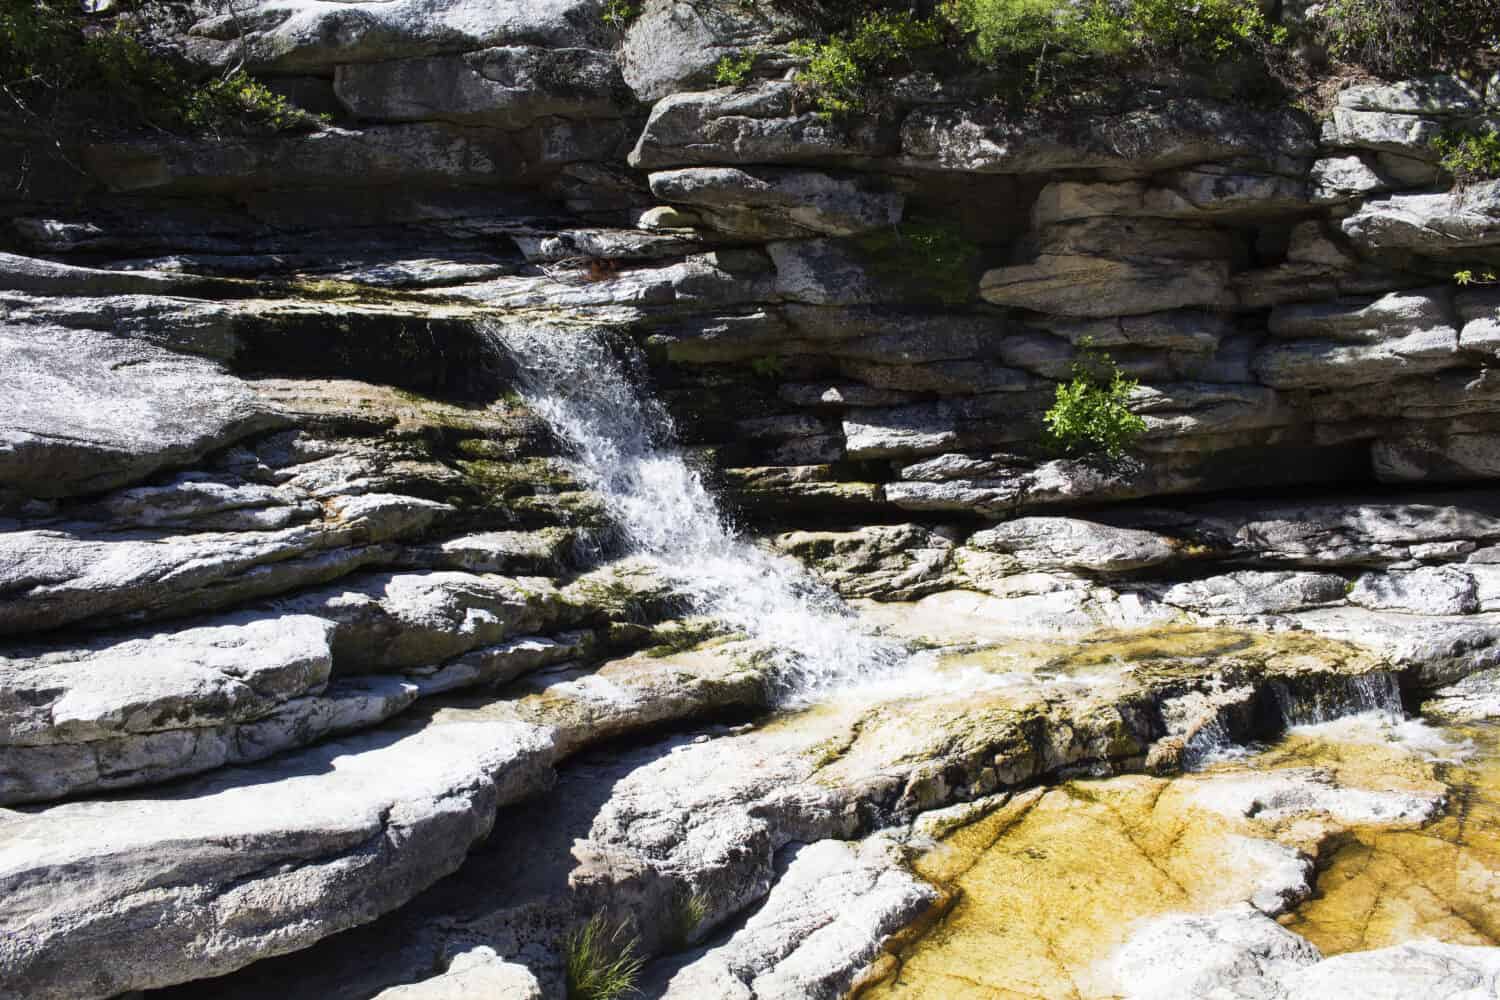 Stream leading to Verkeerderkill Falls in Upstate NY